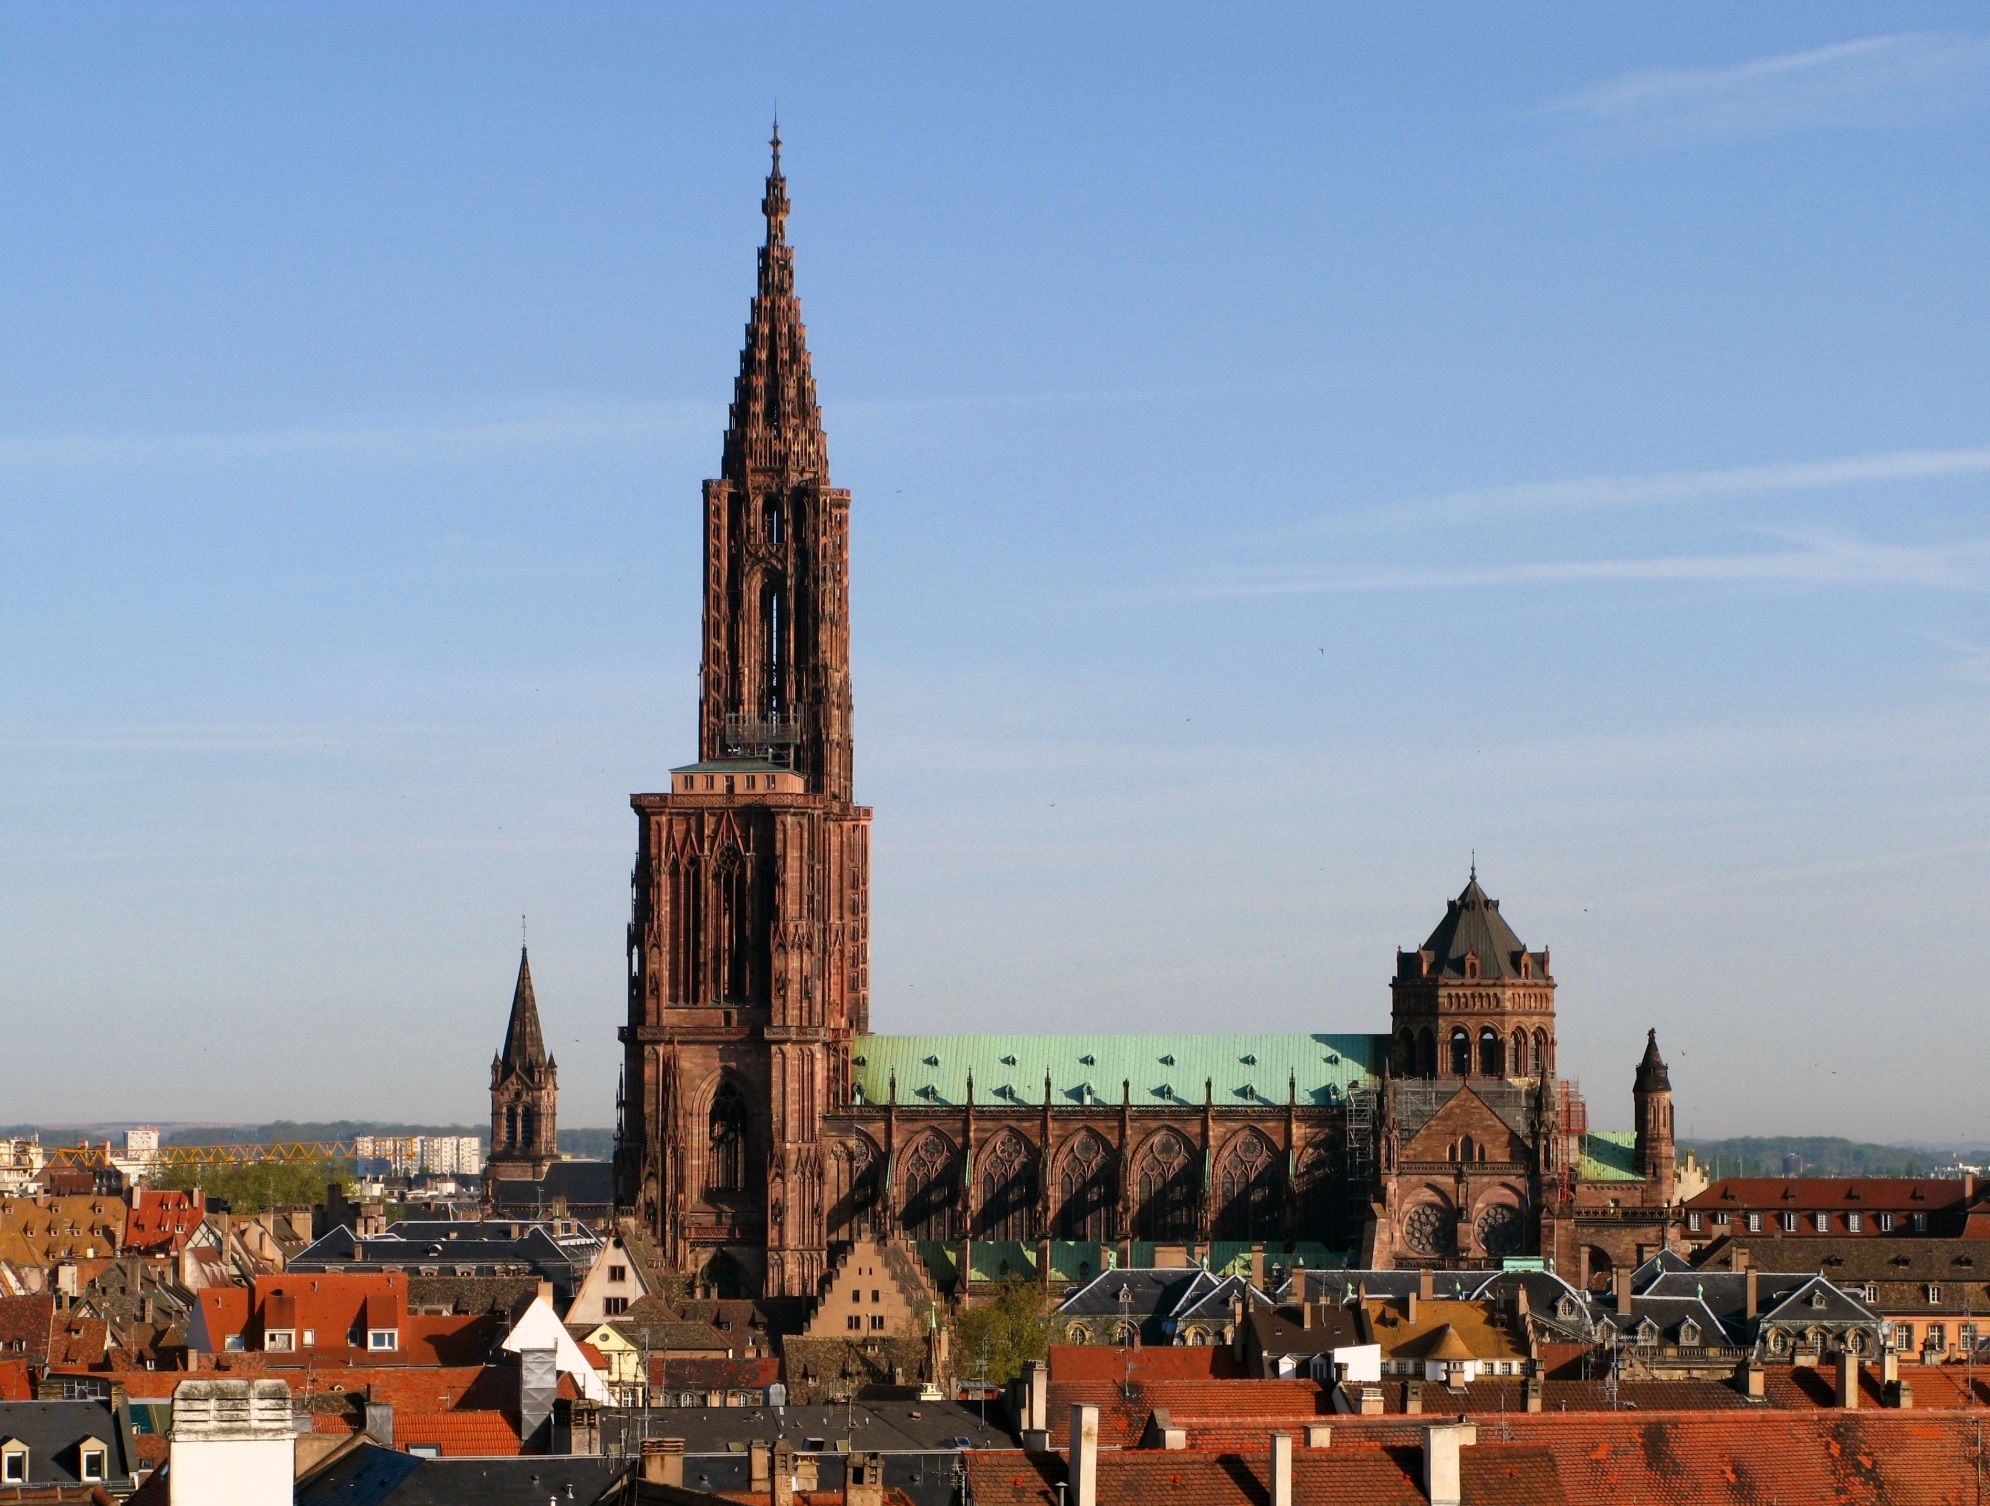 https://net4info.de/albums/albums/userpics/10003/Strasbourg_Cathedral.jpg